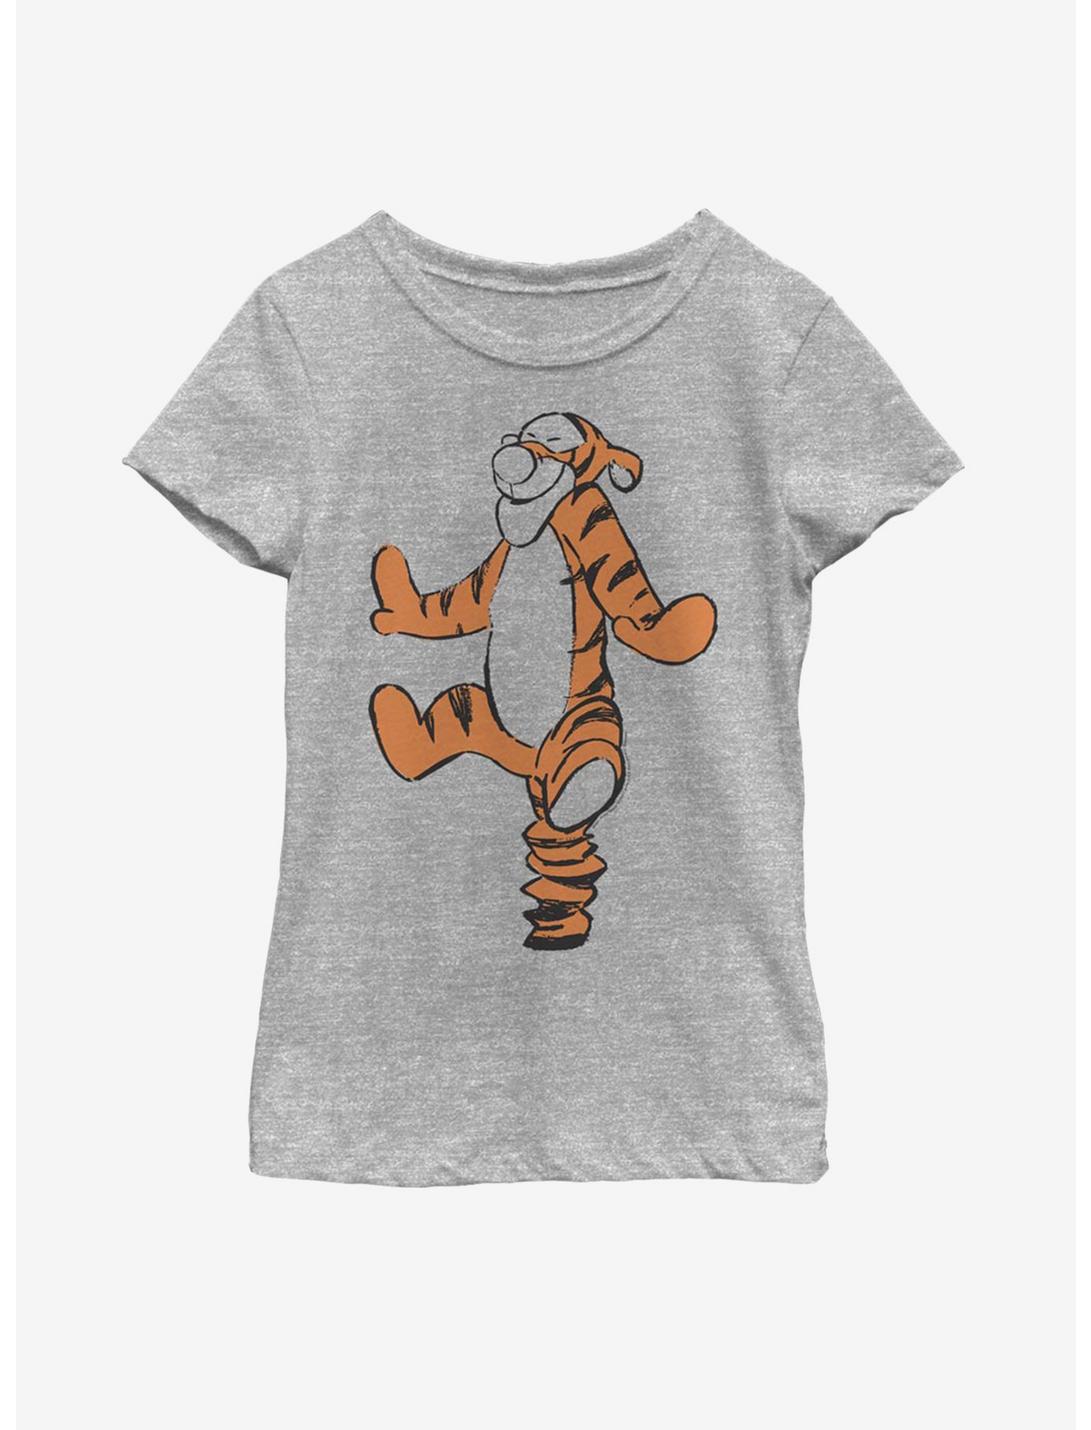 Disney Winnie The Pooh Basic Sketch Tigger Youth Girls T-Shirt, ATH HTR, hi-res